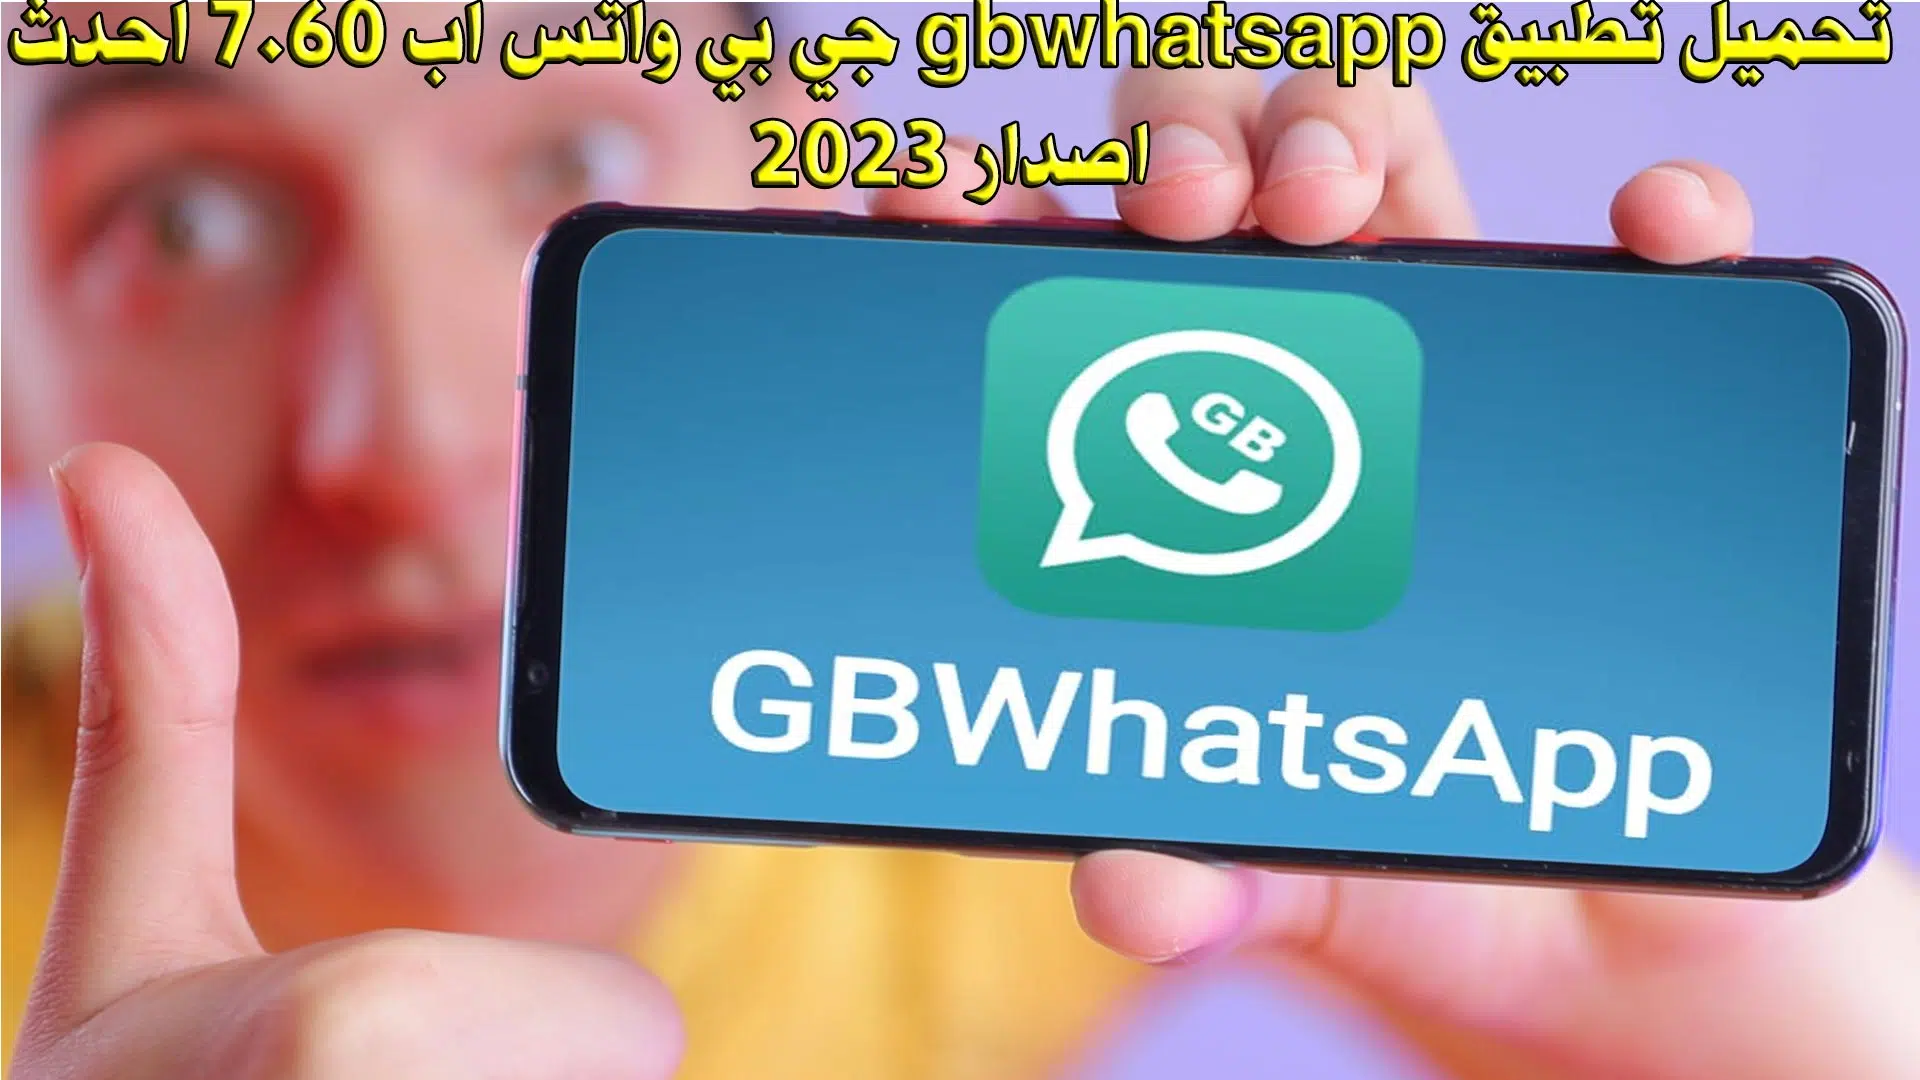 تحميل تطبيق gbwhatsapp جي بي واتس اب 7.60 احدث اصدار 2023